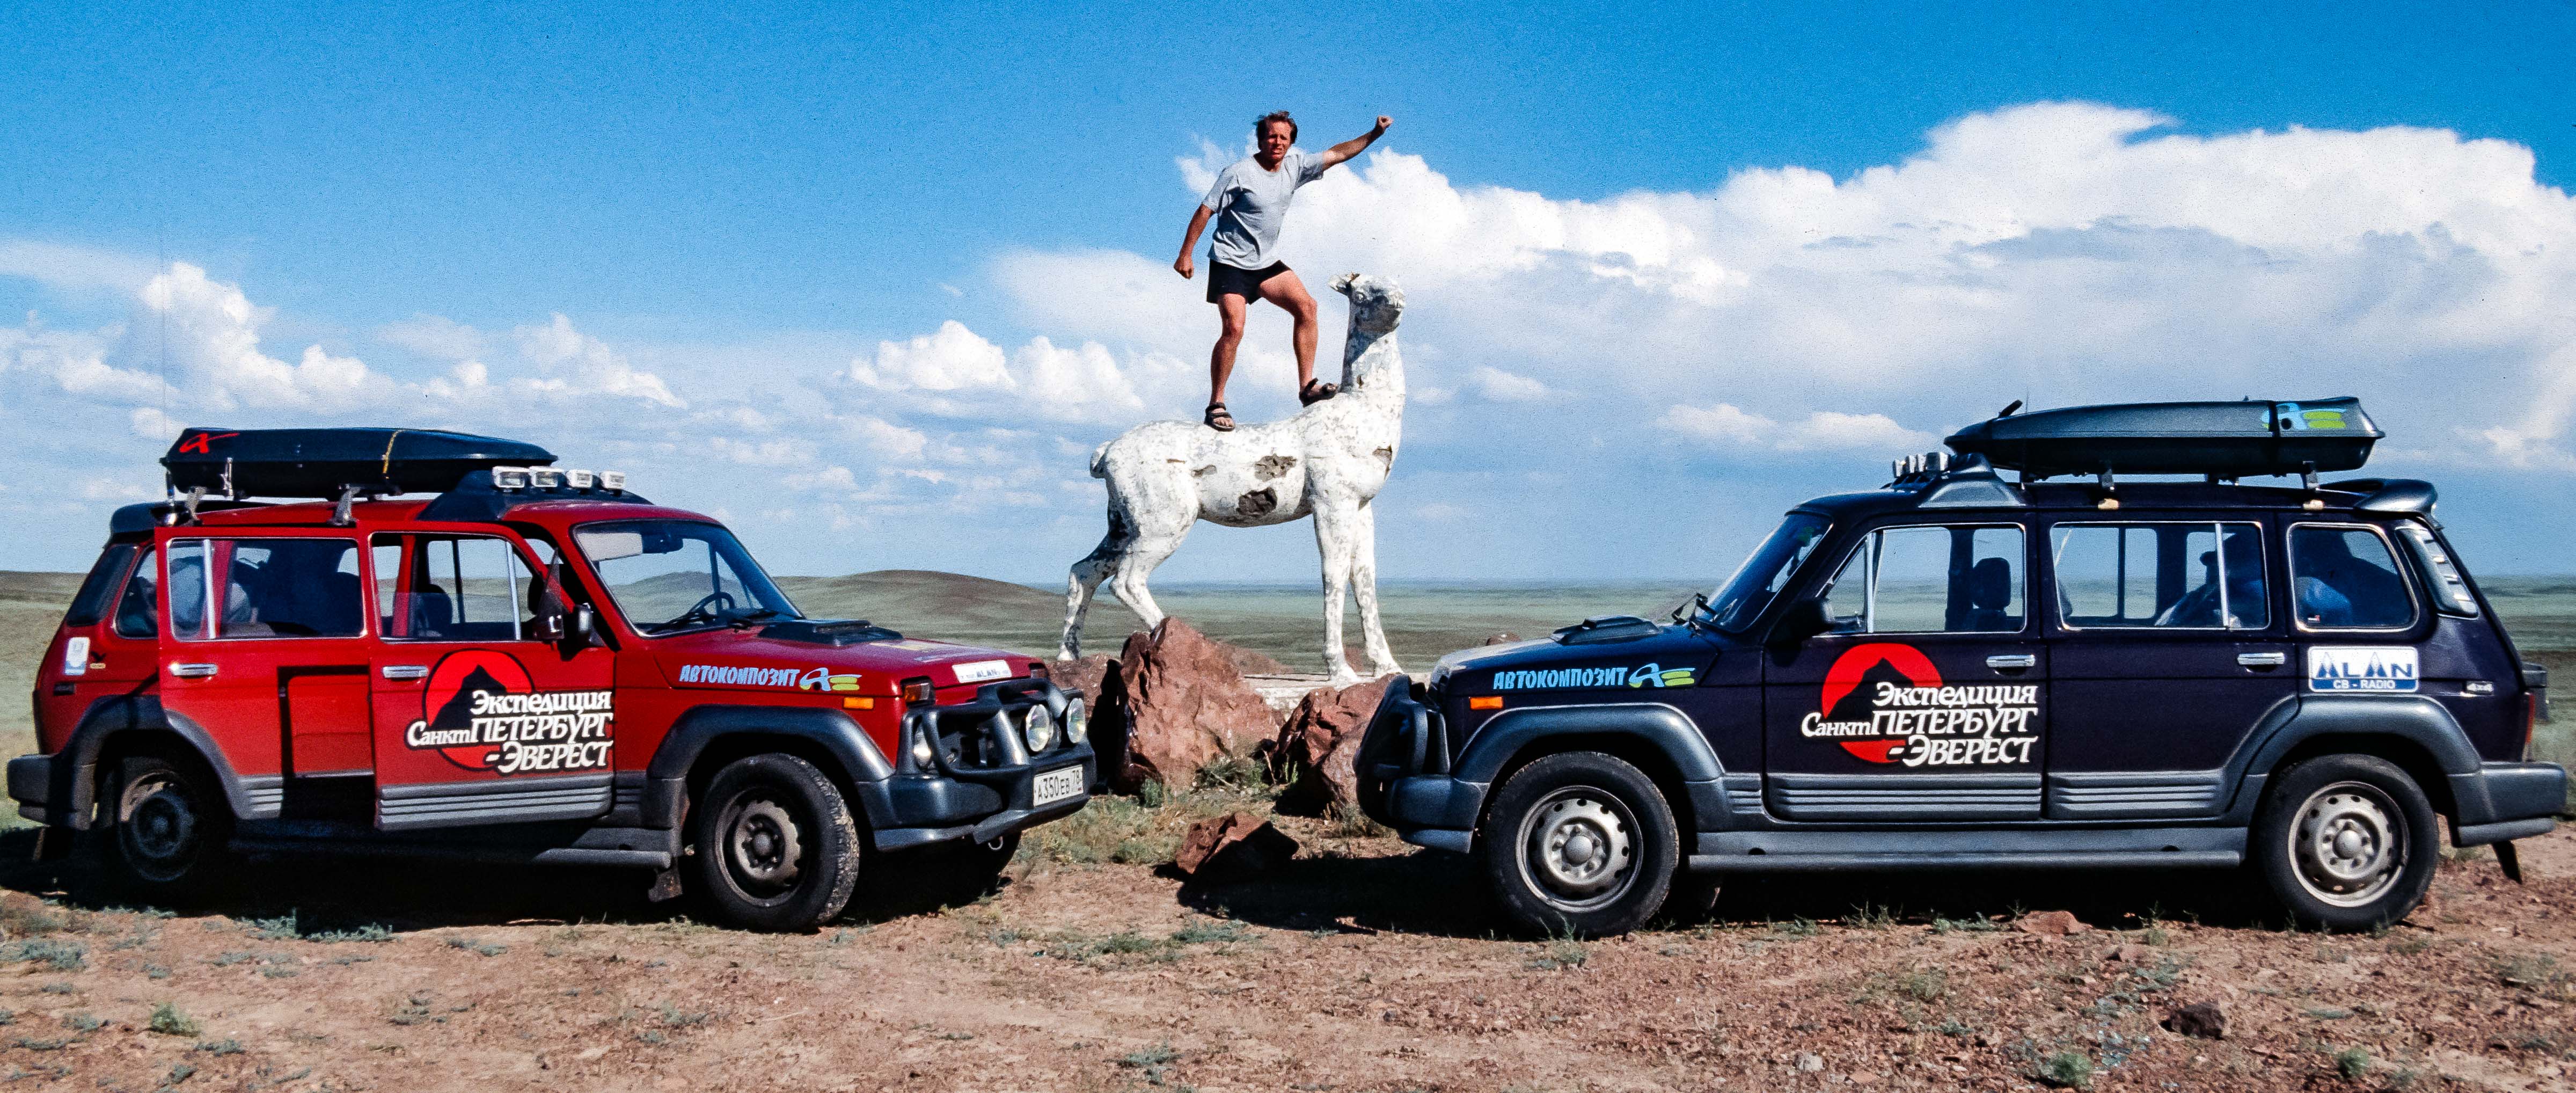 Kazakhstan, Jeff Shea On Tibet 98 Expedition, 1998